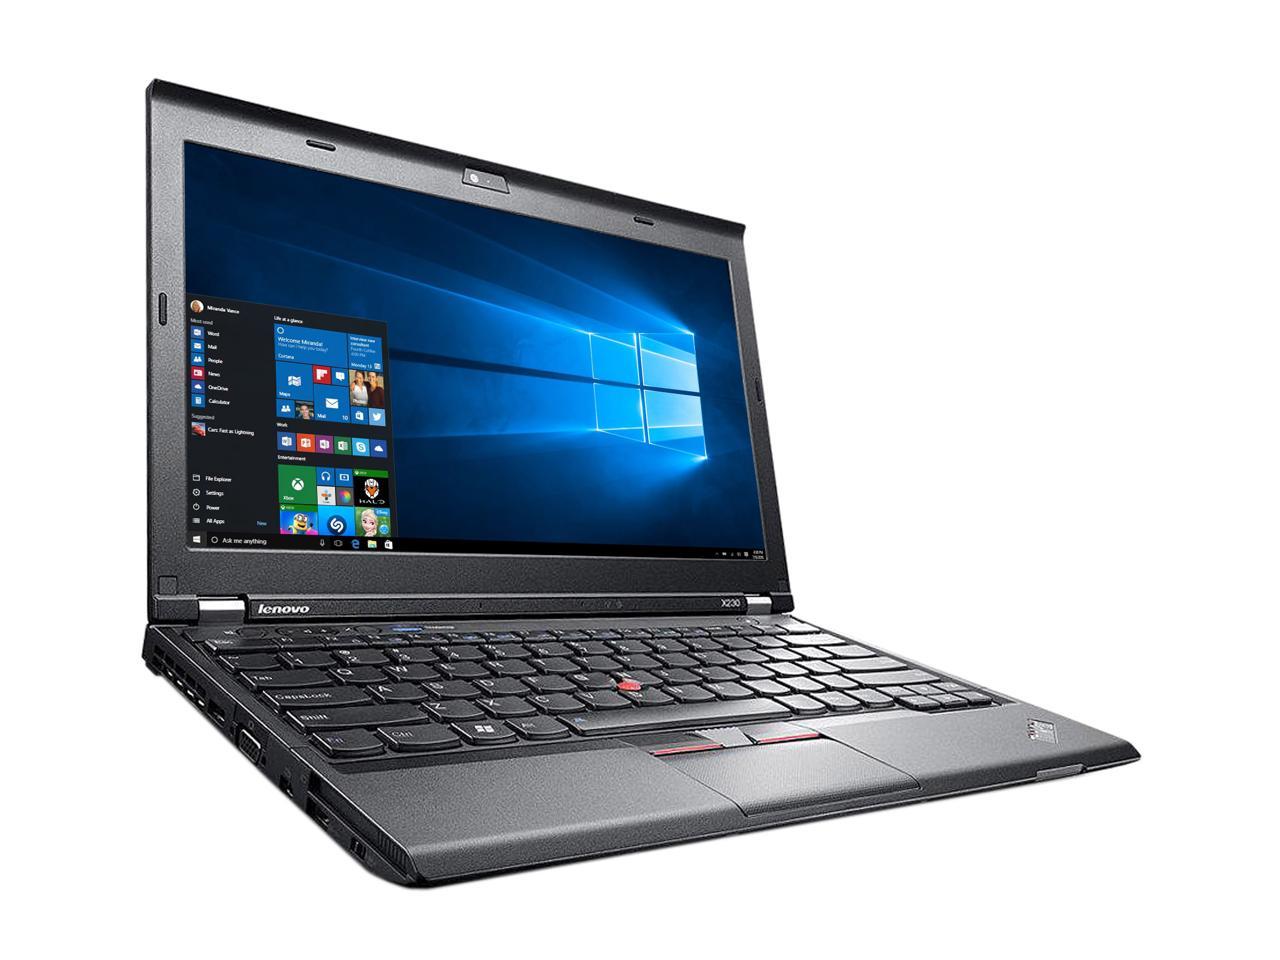 Lenovo Grade A ThinkPad X230 12.5" Laptop Intel Core i5 3rd Gen 3320M (2.60 GHz) 8 GB DDR3 512 GB SSD WIFI Windows 10 Home 64 bits (Multi-language) 1 Year Warranty